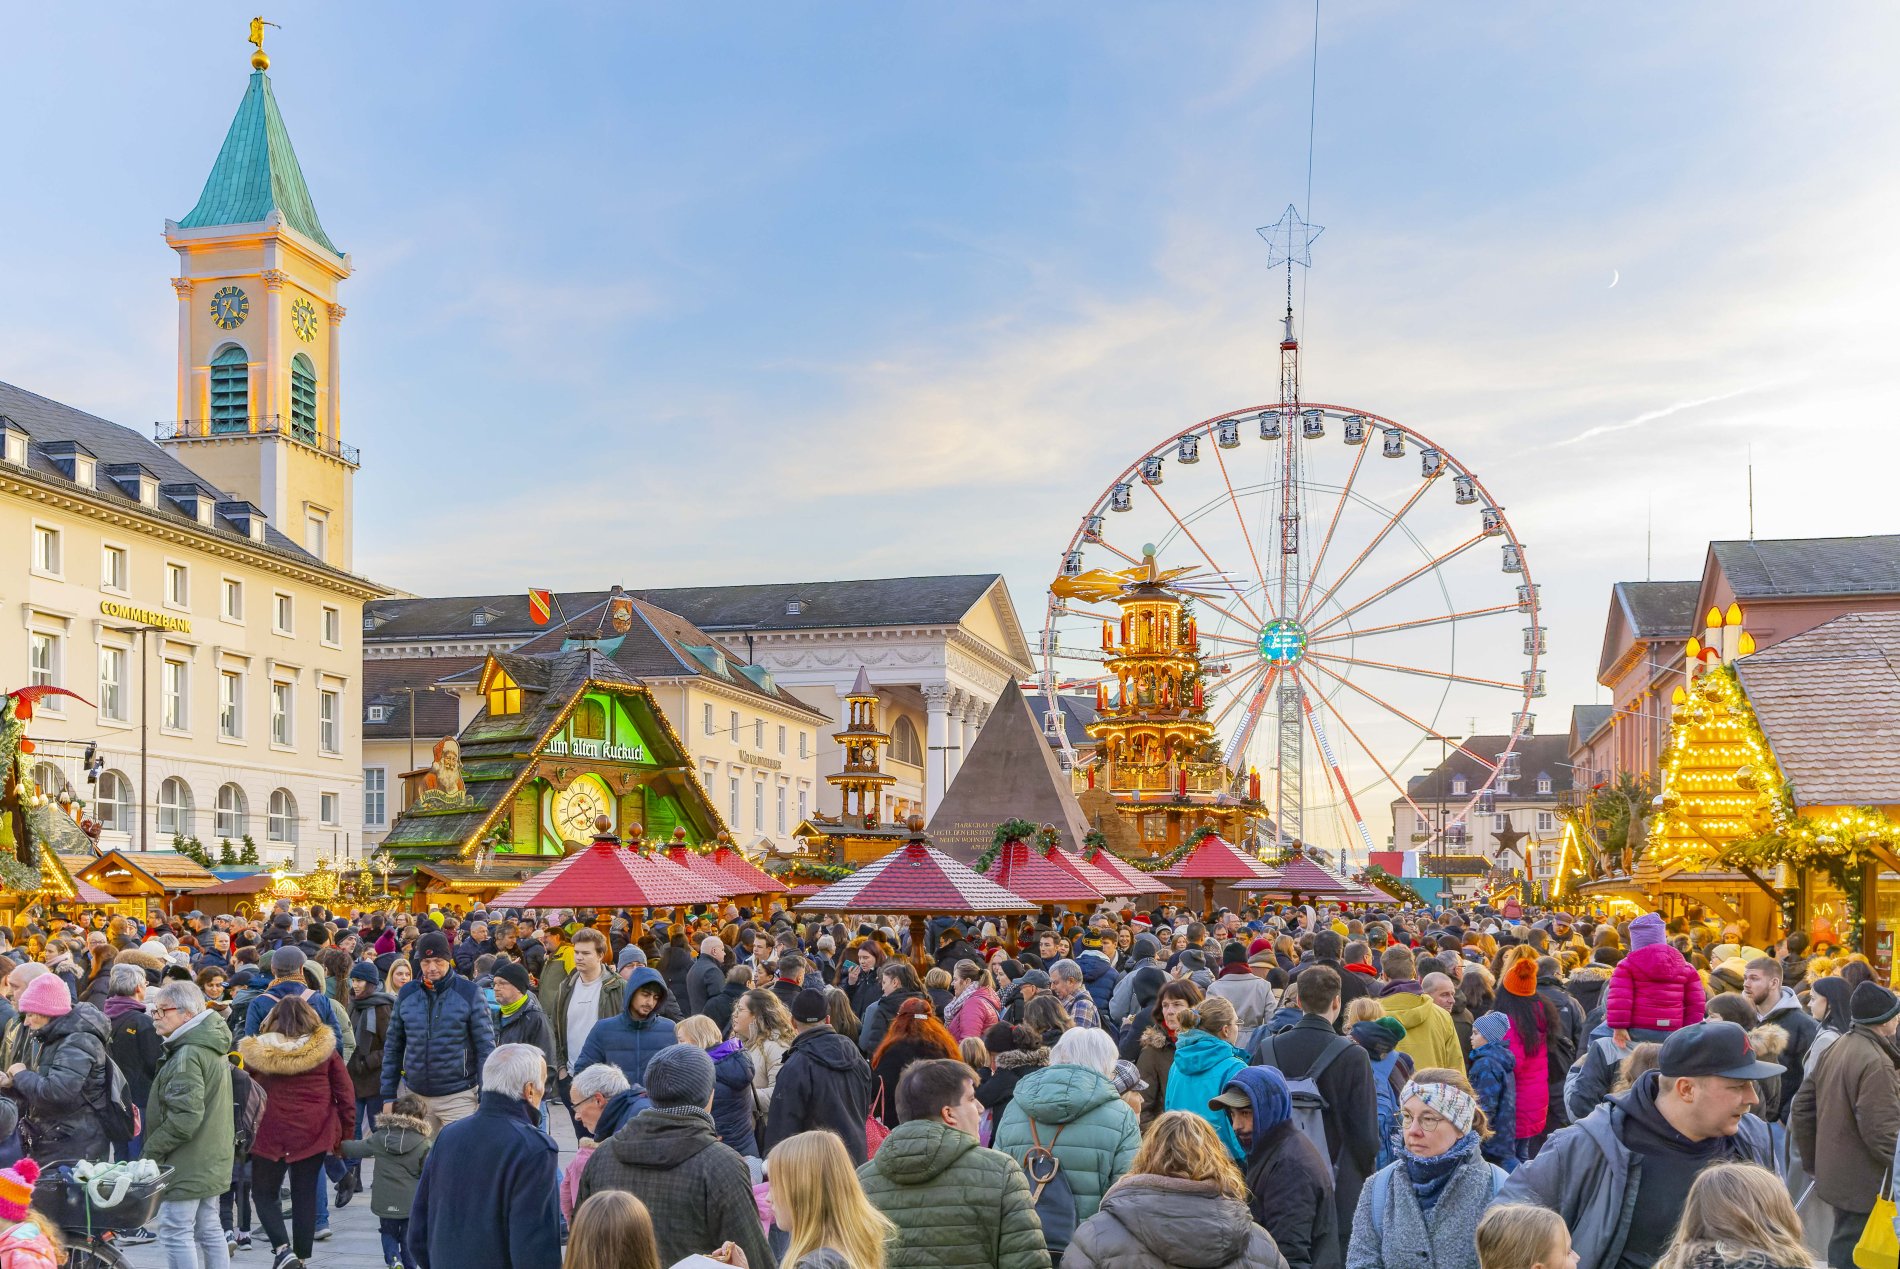 The Christmas market in Karlsruhe